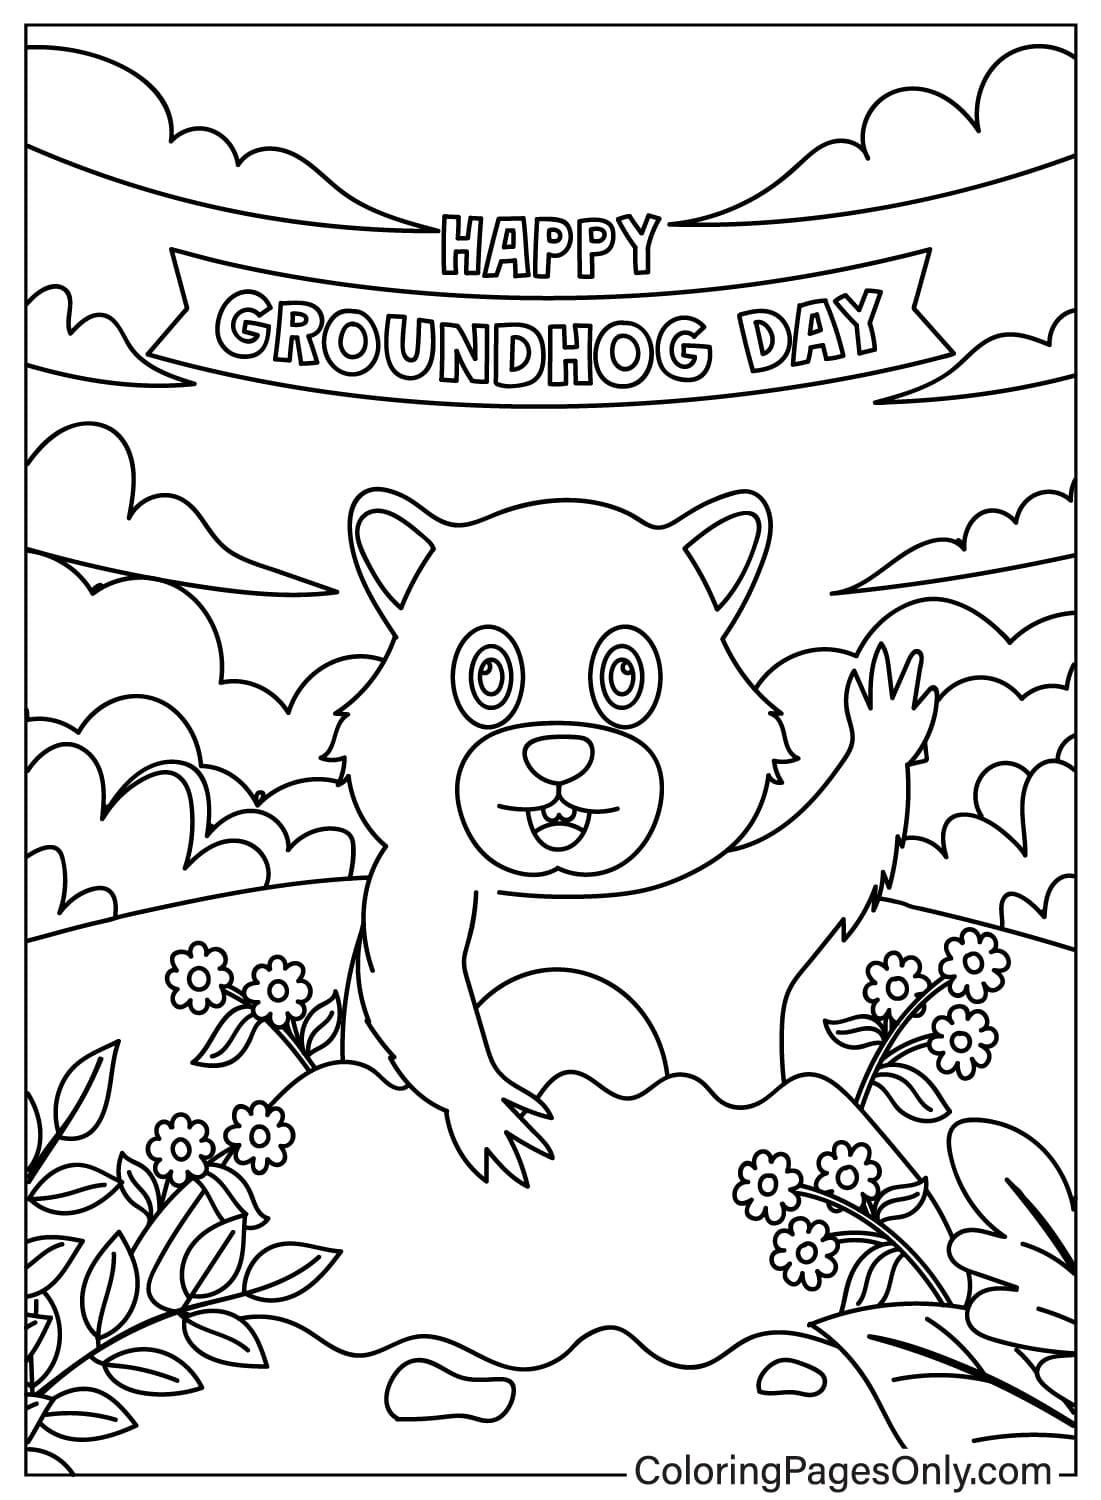 Fijne Groundhog Day kleurplaat van Groundhog Day